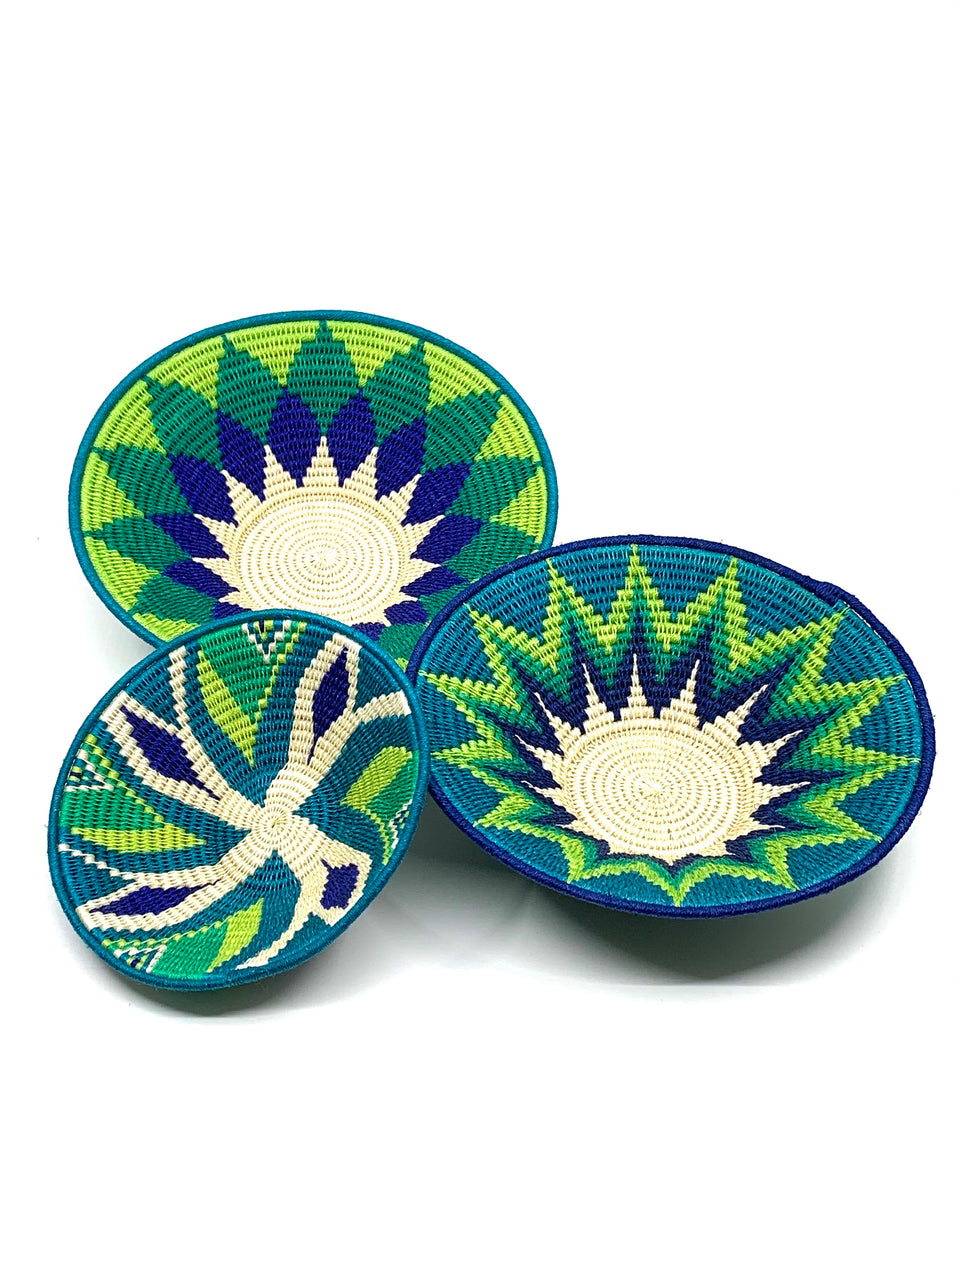 Sisal Weave Bowl - Blue & Green Tones